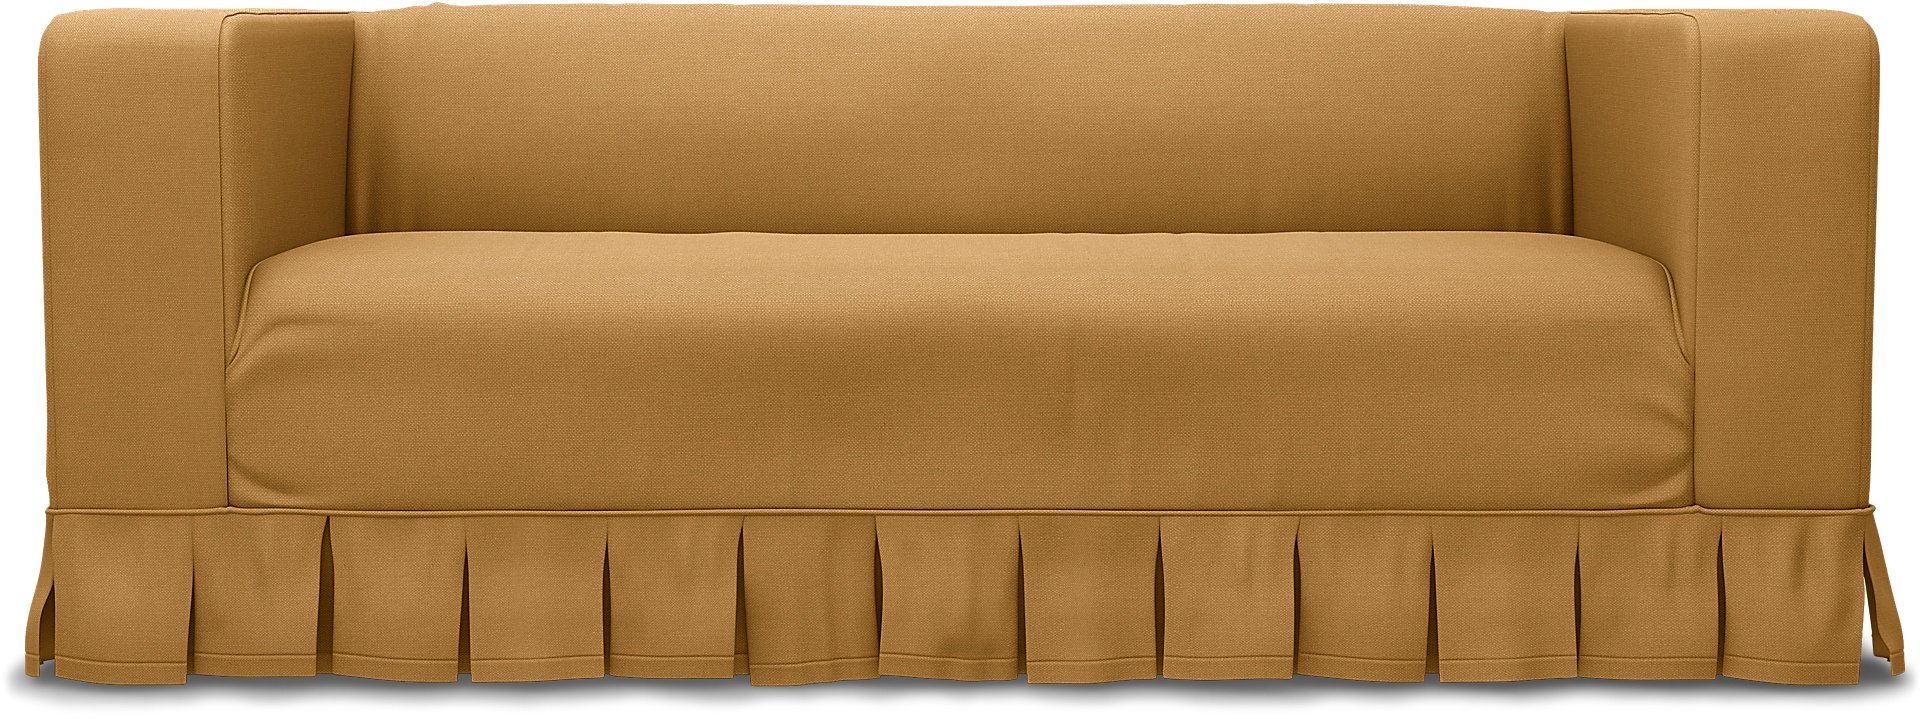 IKEA - Klippan 2 Seater Sofa Cover, Mustard, Linen - Bemz